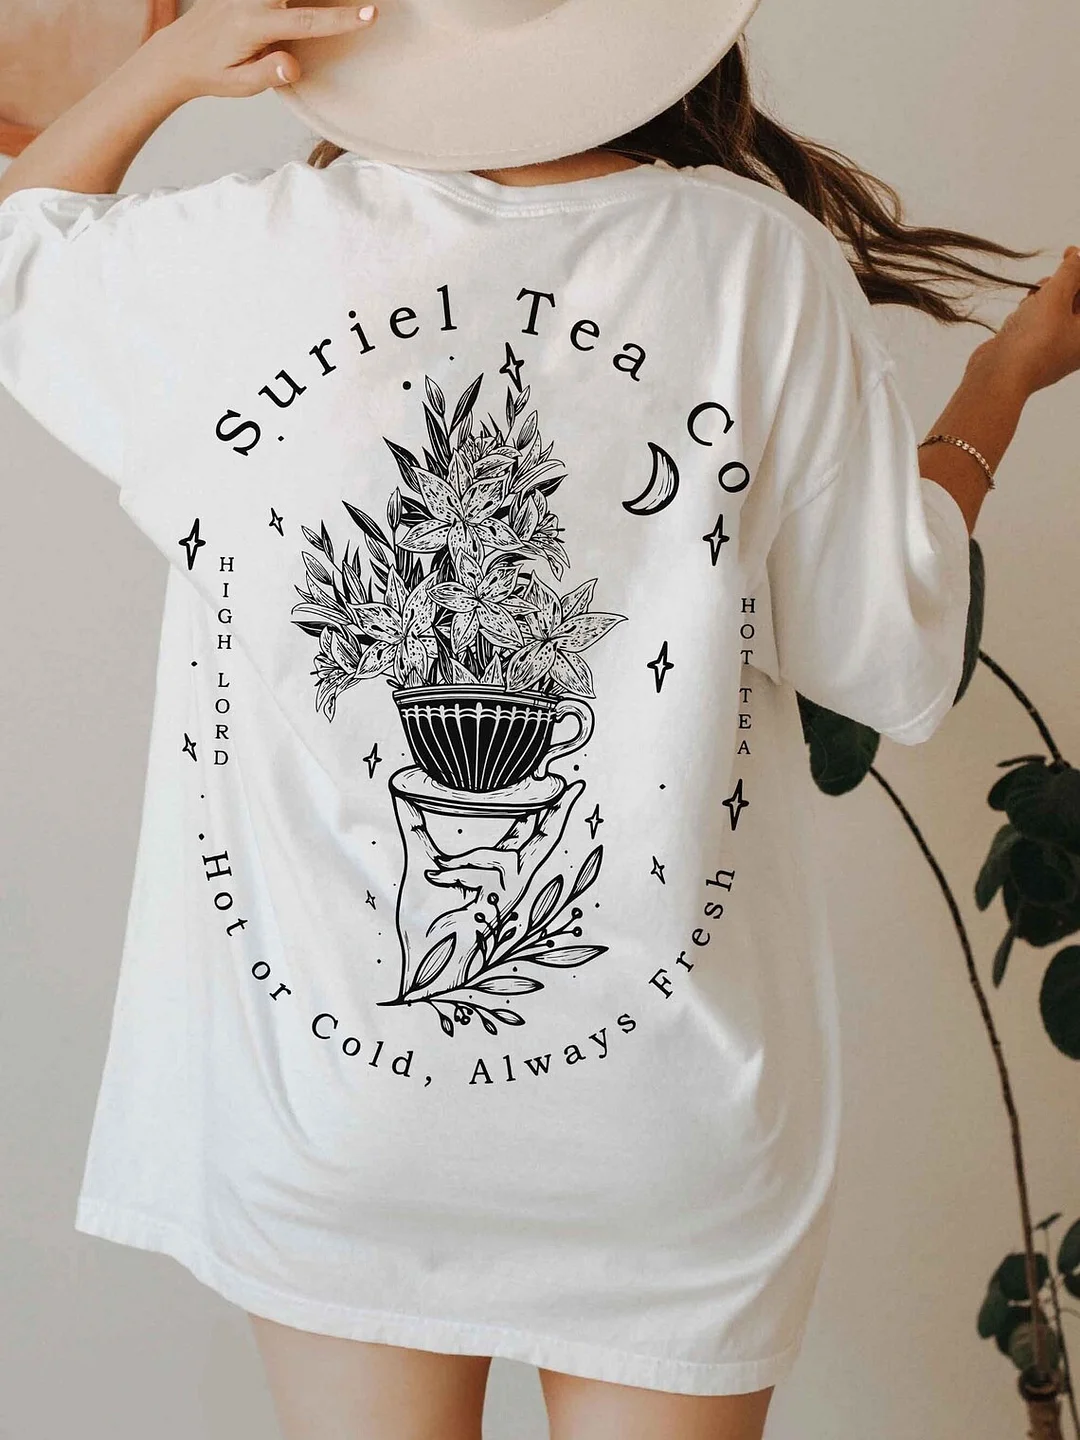 Suriel Tea Co T-shirt | Sarah J Maas / DarkAcademias /Darkacademias